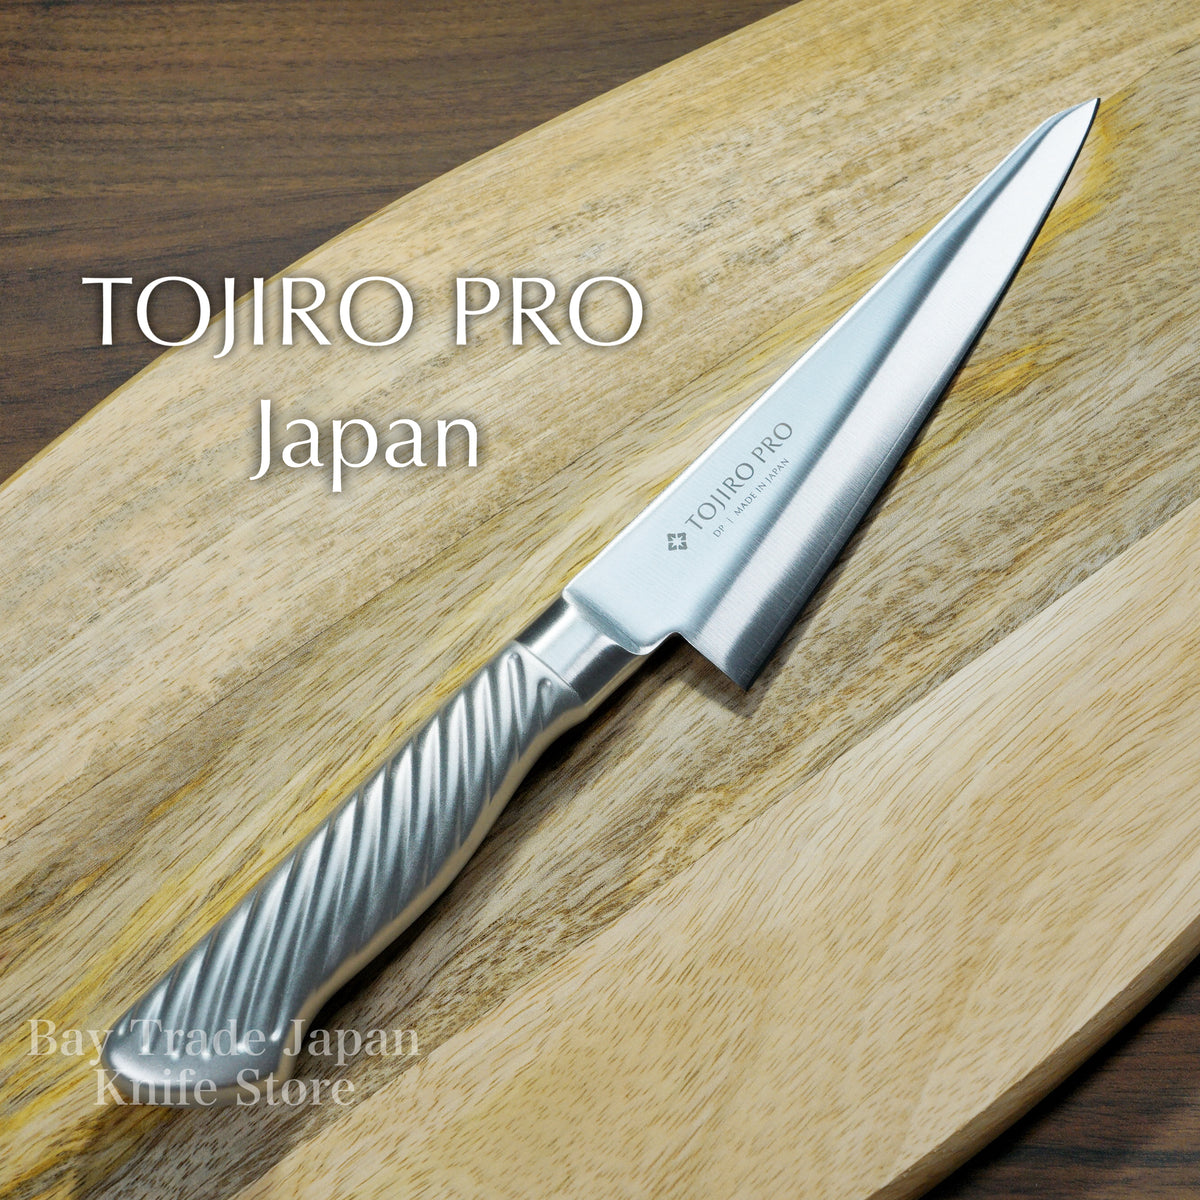 Tojiro Pro 18-8 Double Rolling Pull Through Sharpener